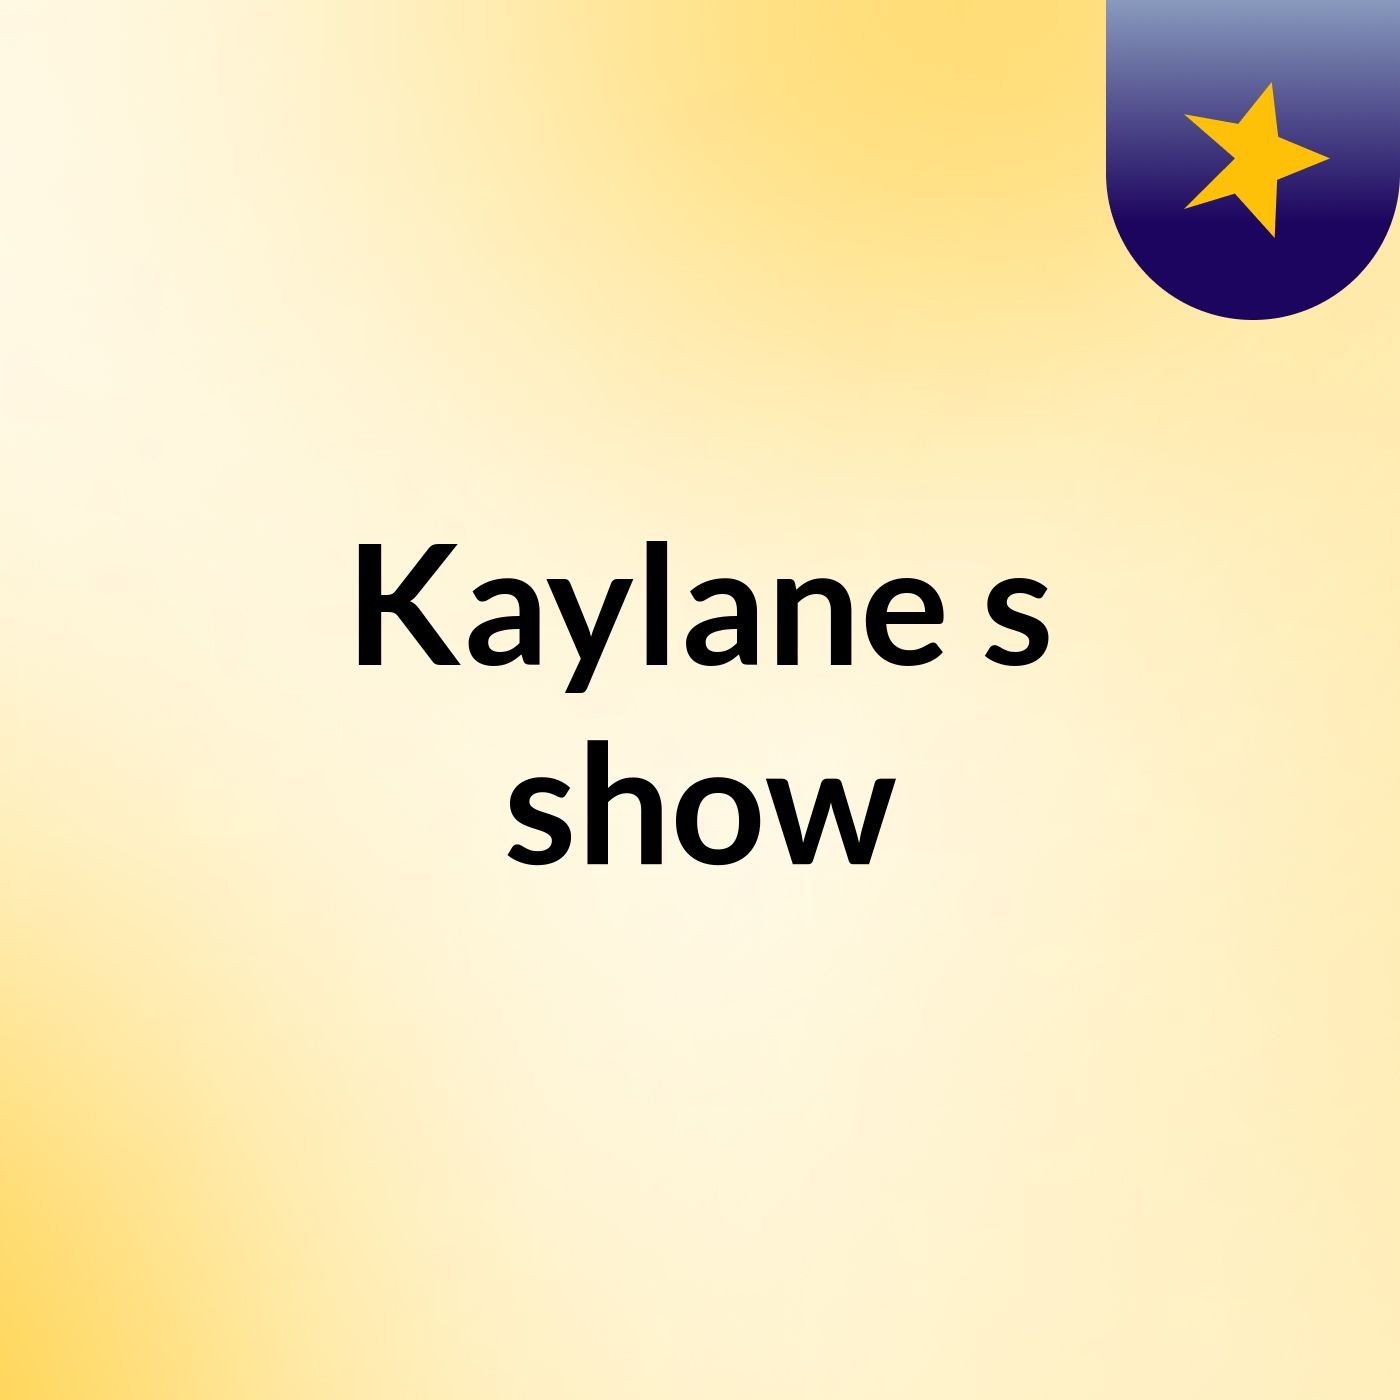 Kaylane's show